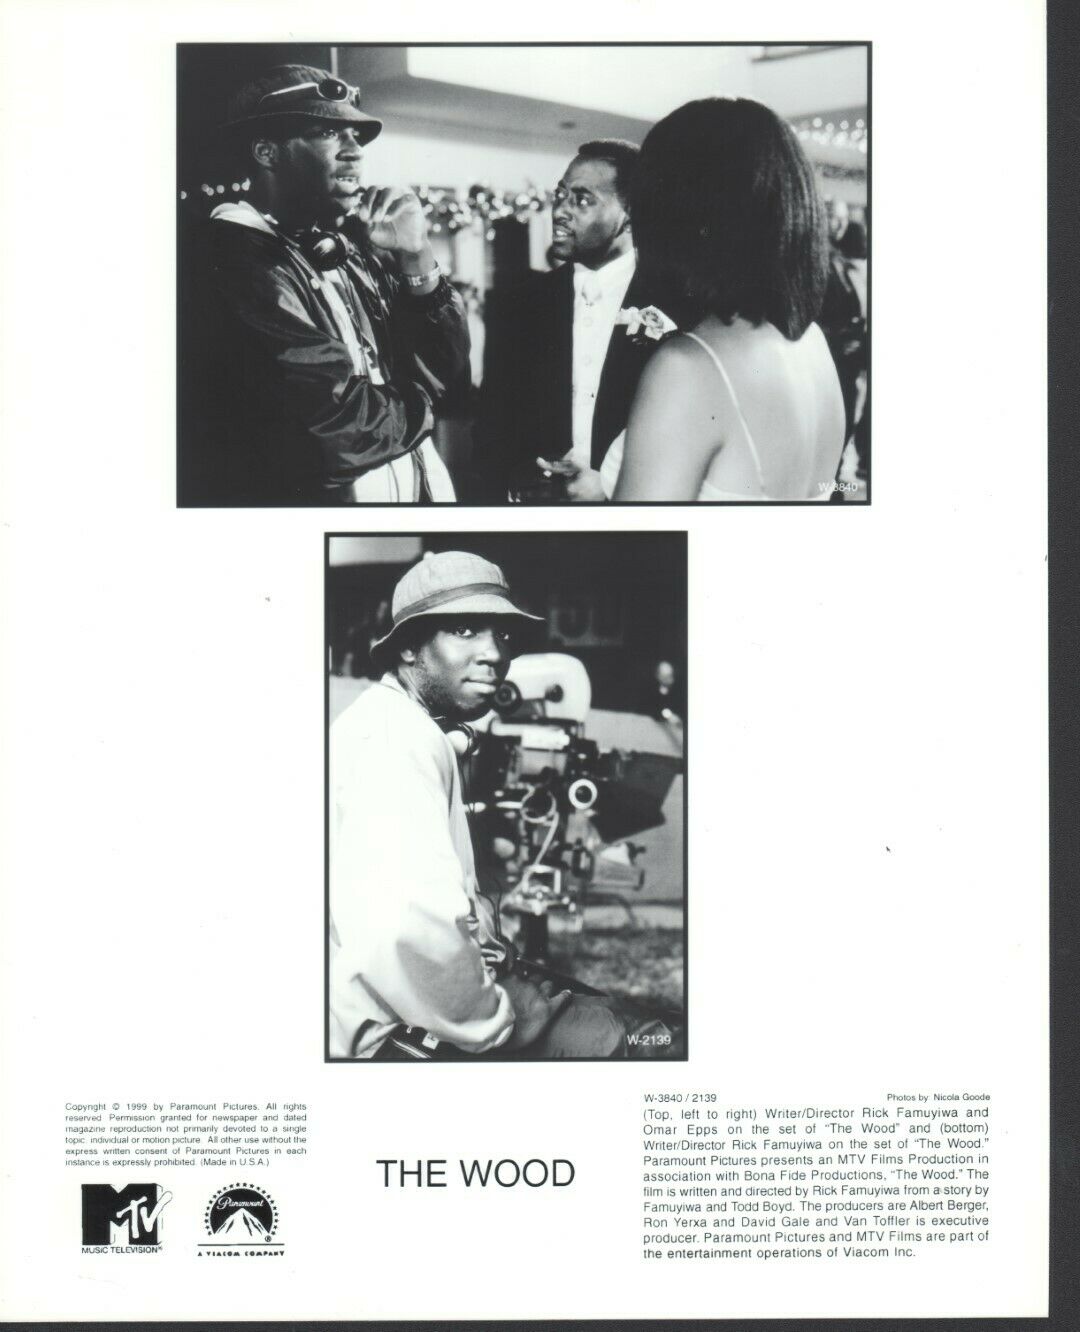 The Wood (1999) 8x10 Black & White Movie Photo #2139